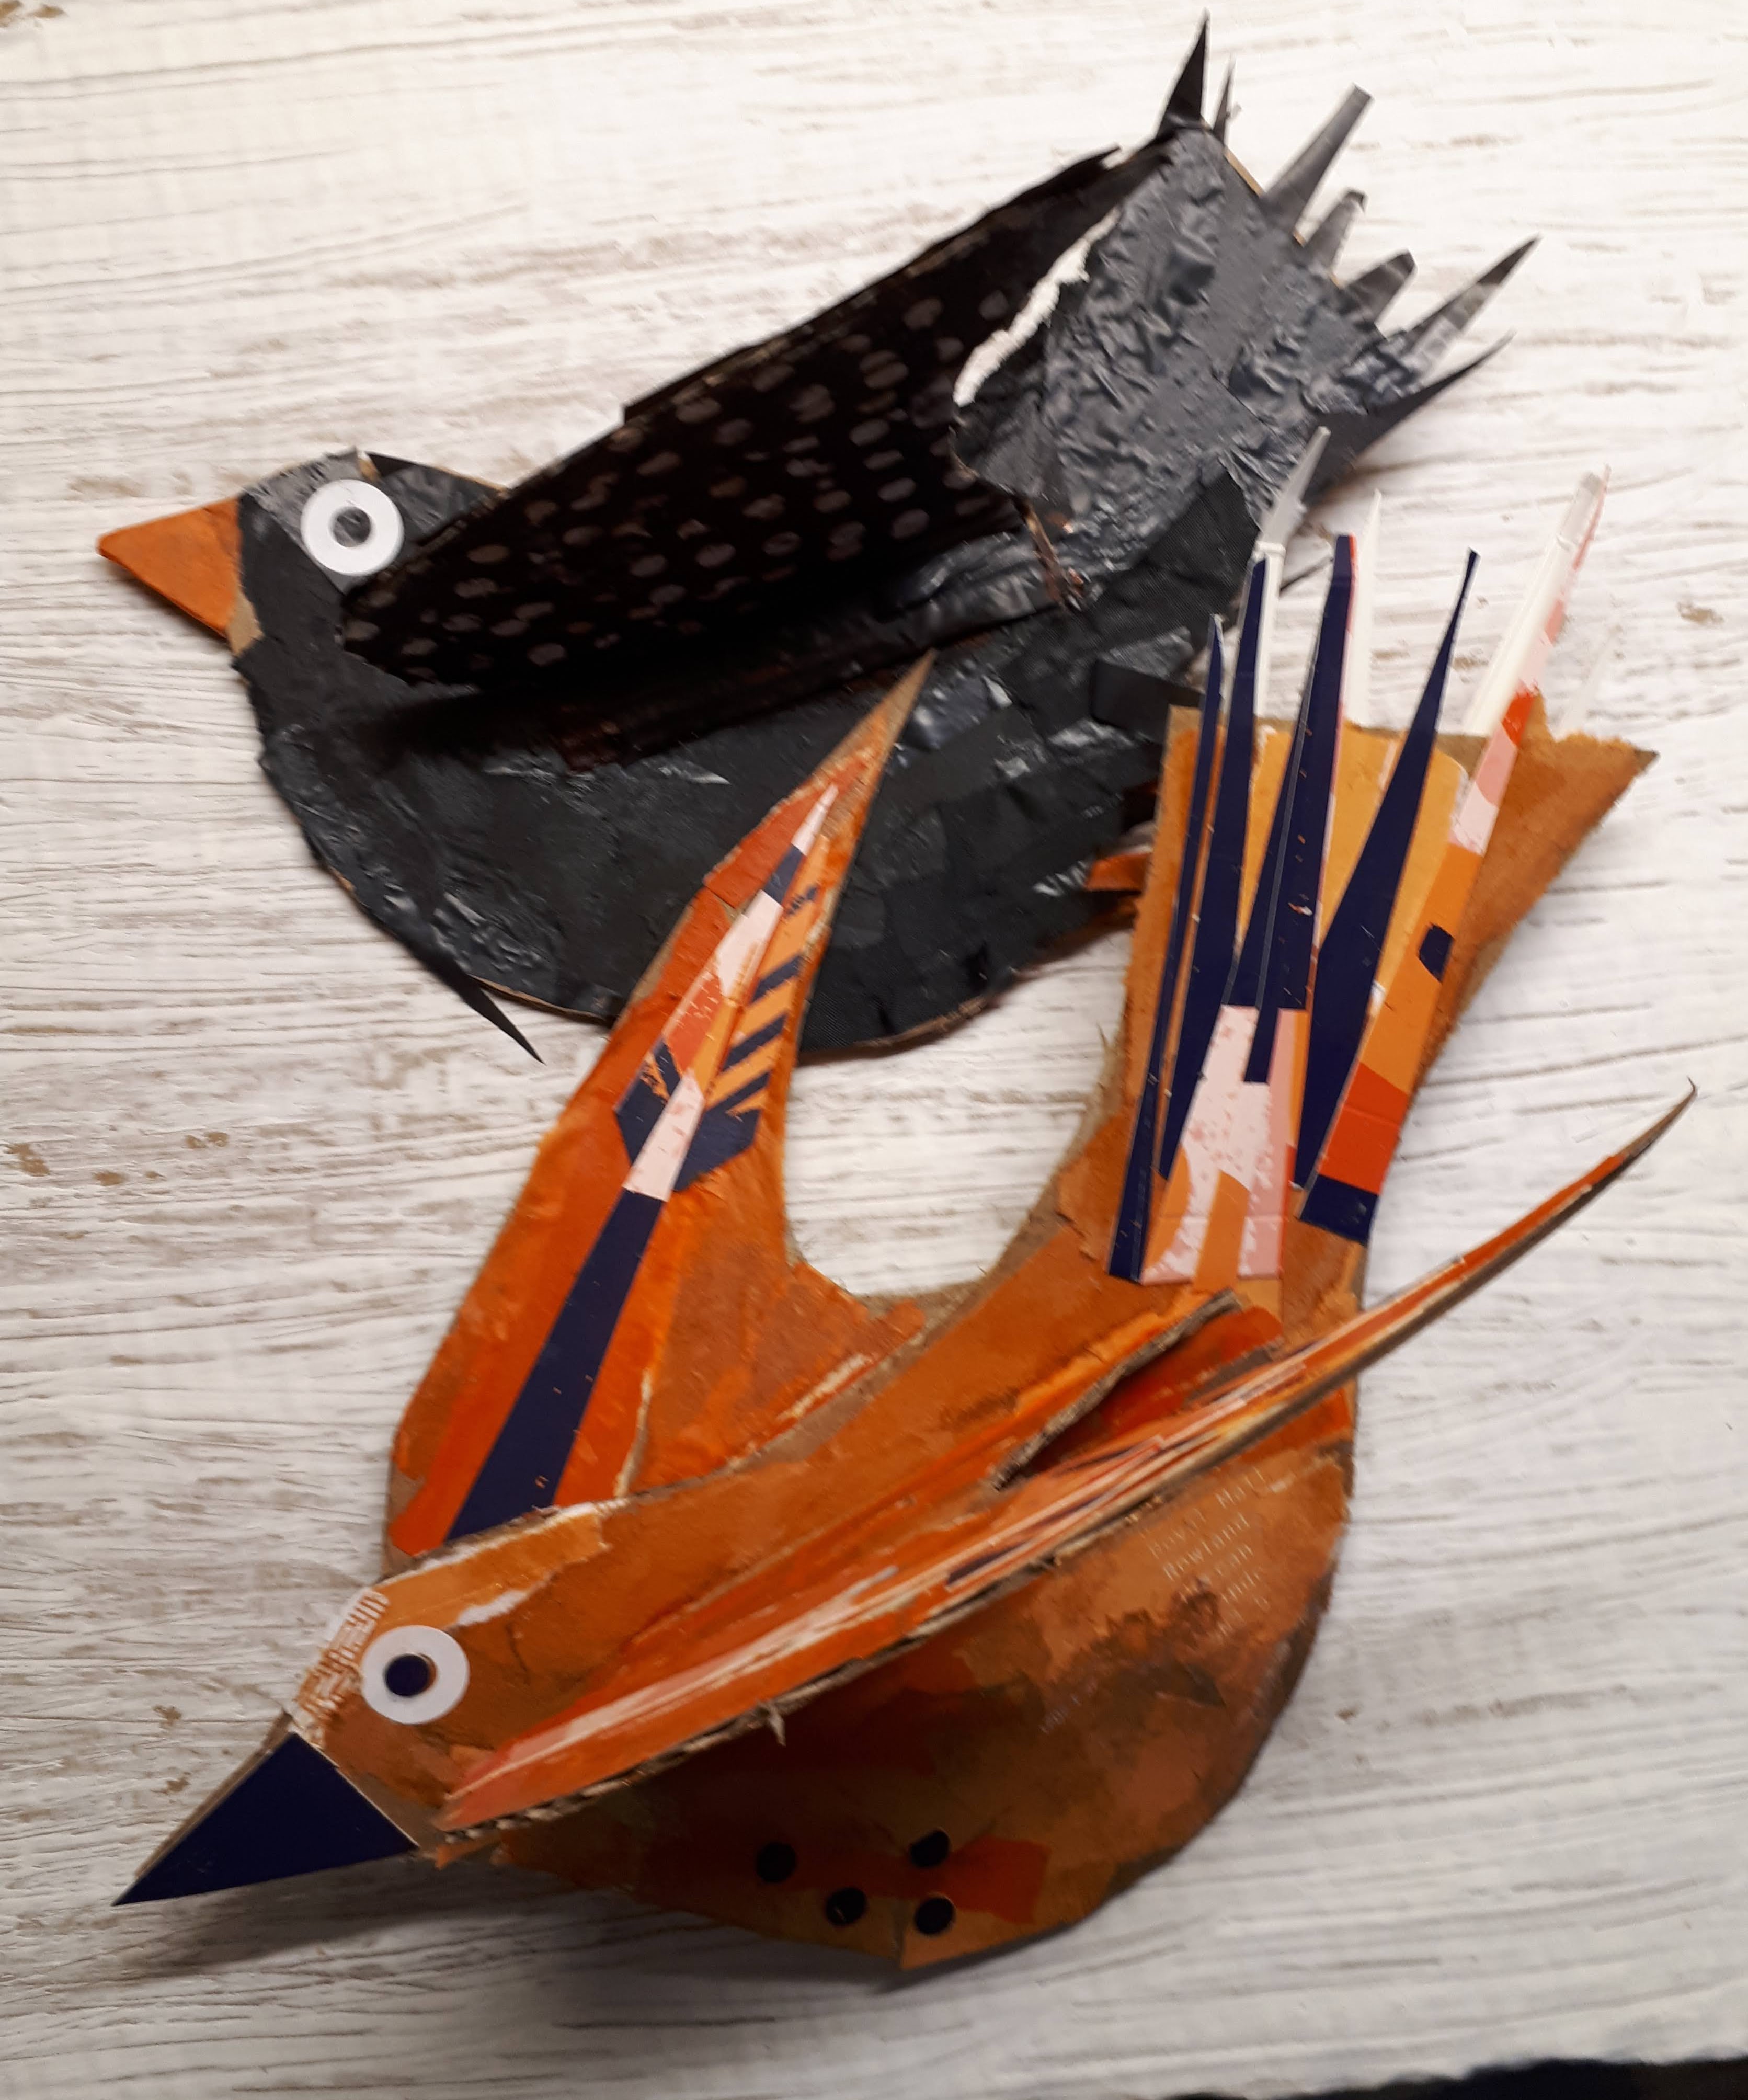 A blackbird and an orange bird made from painted cardboard